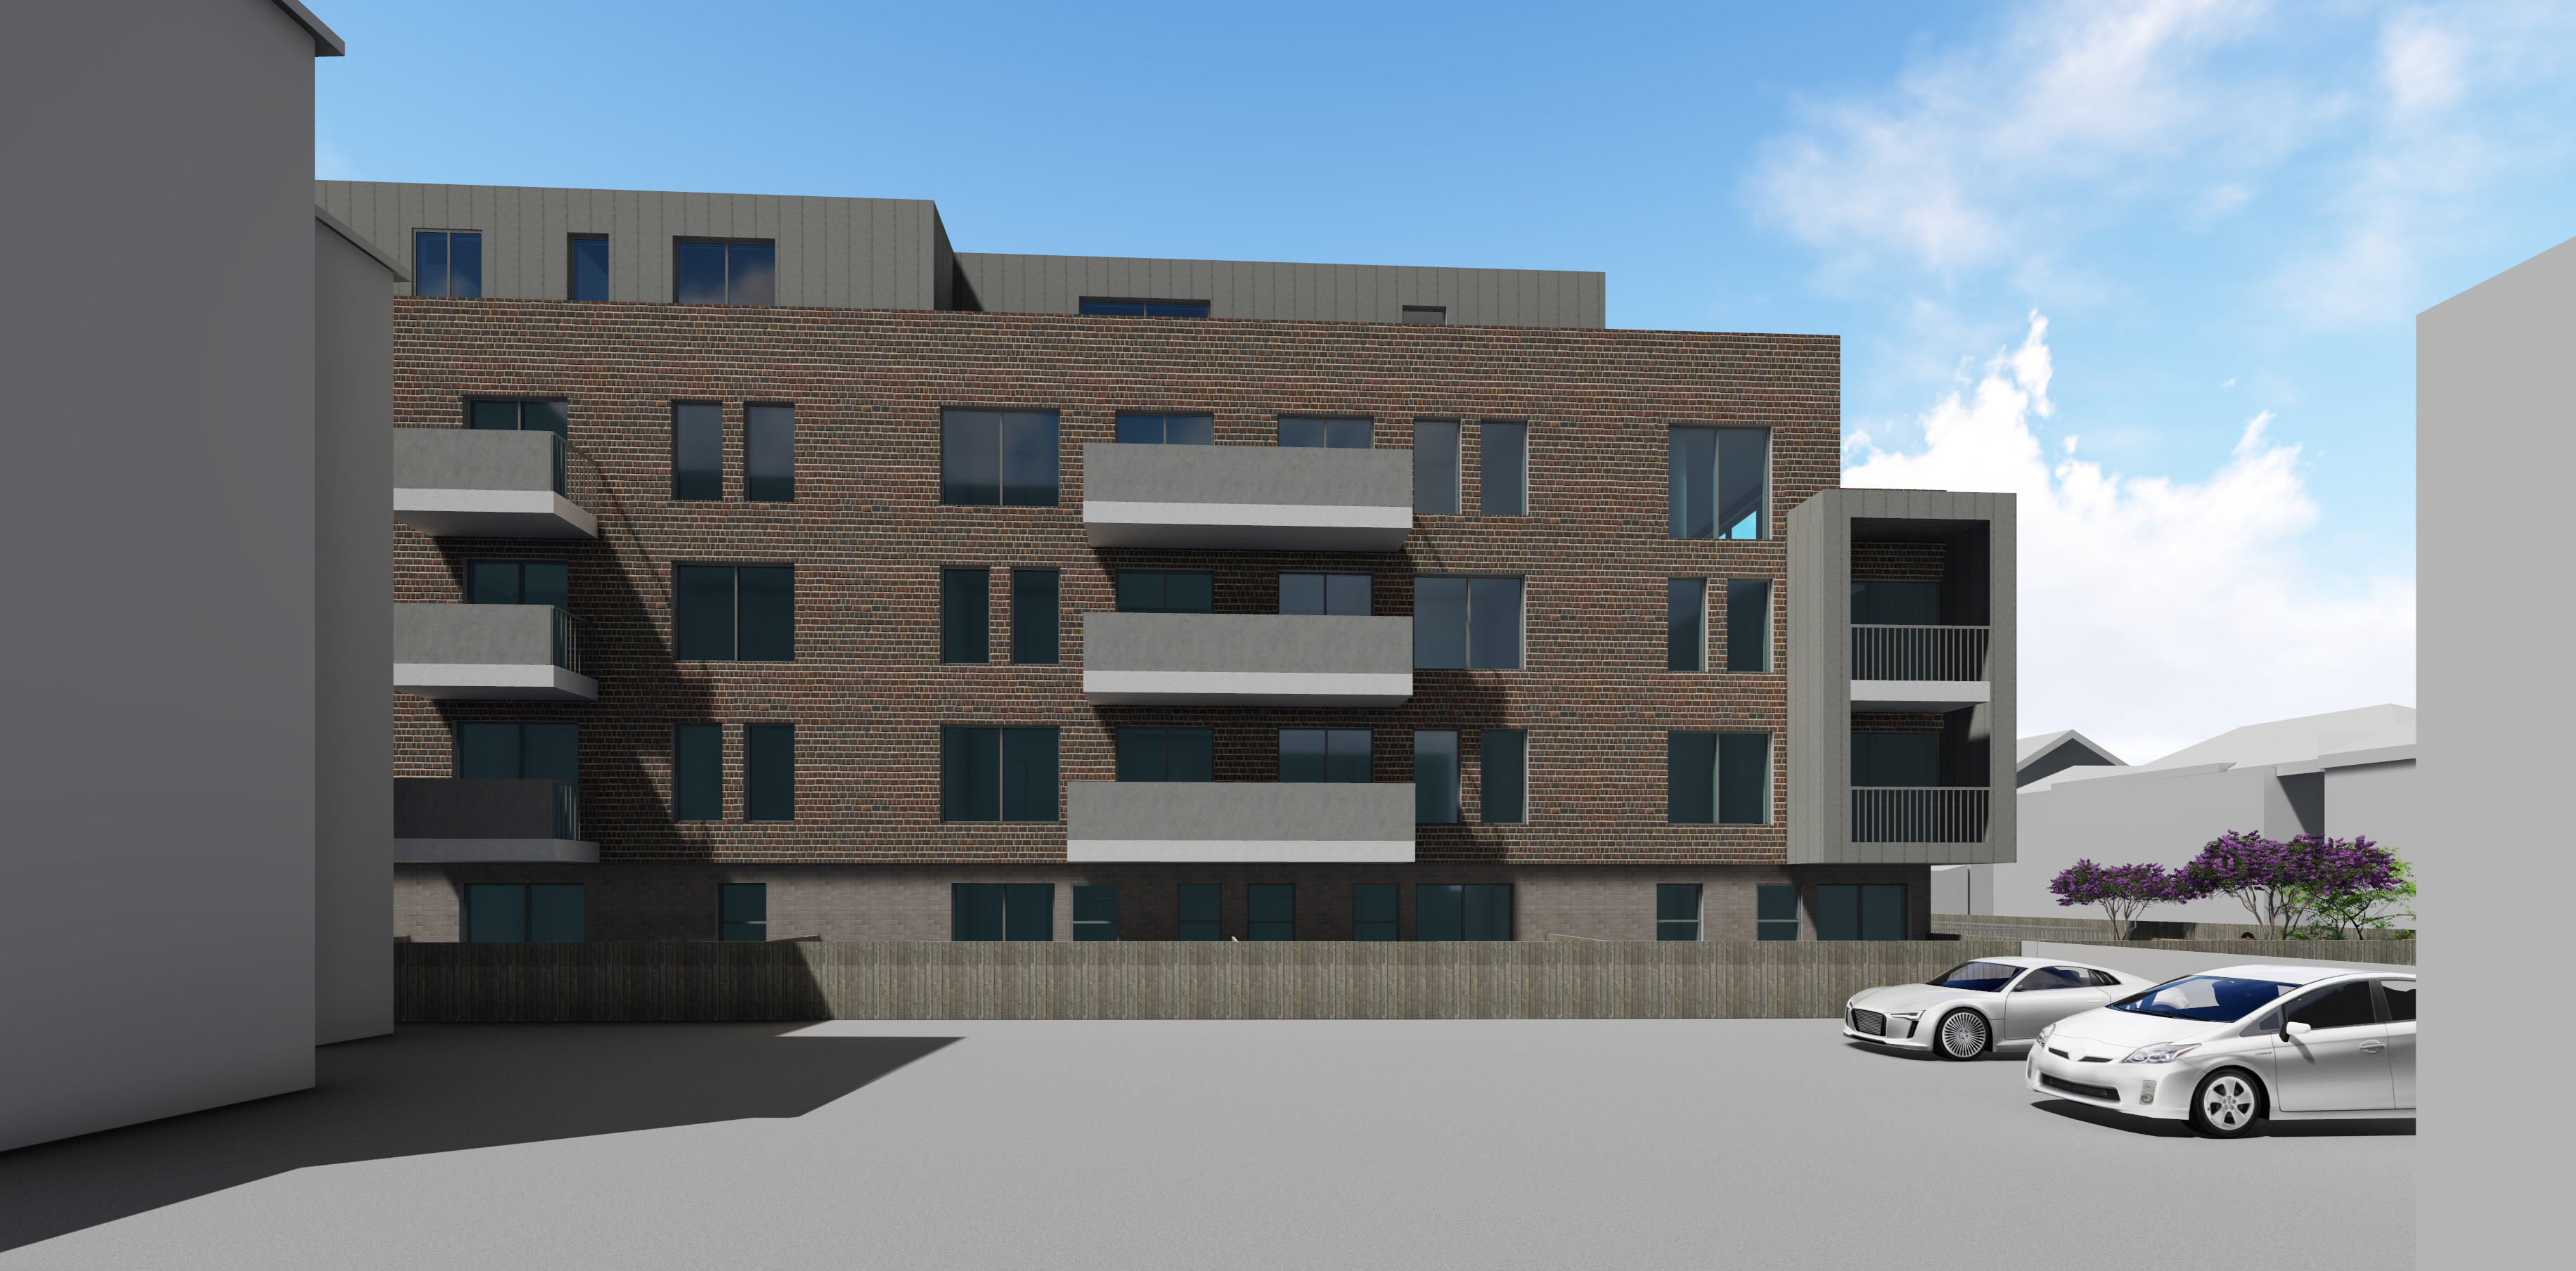 New build residential development London